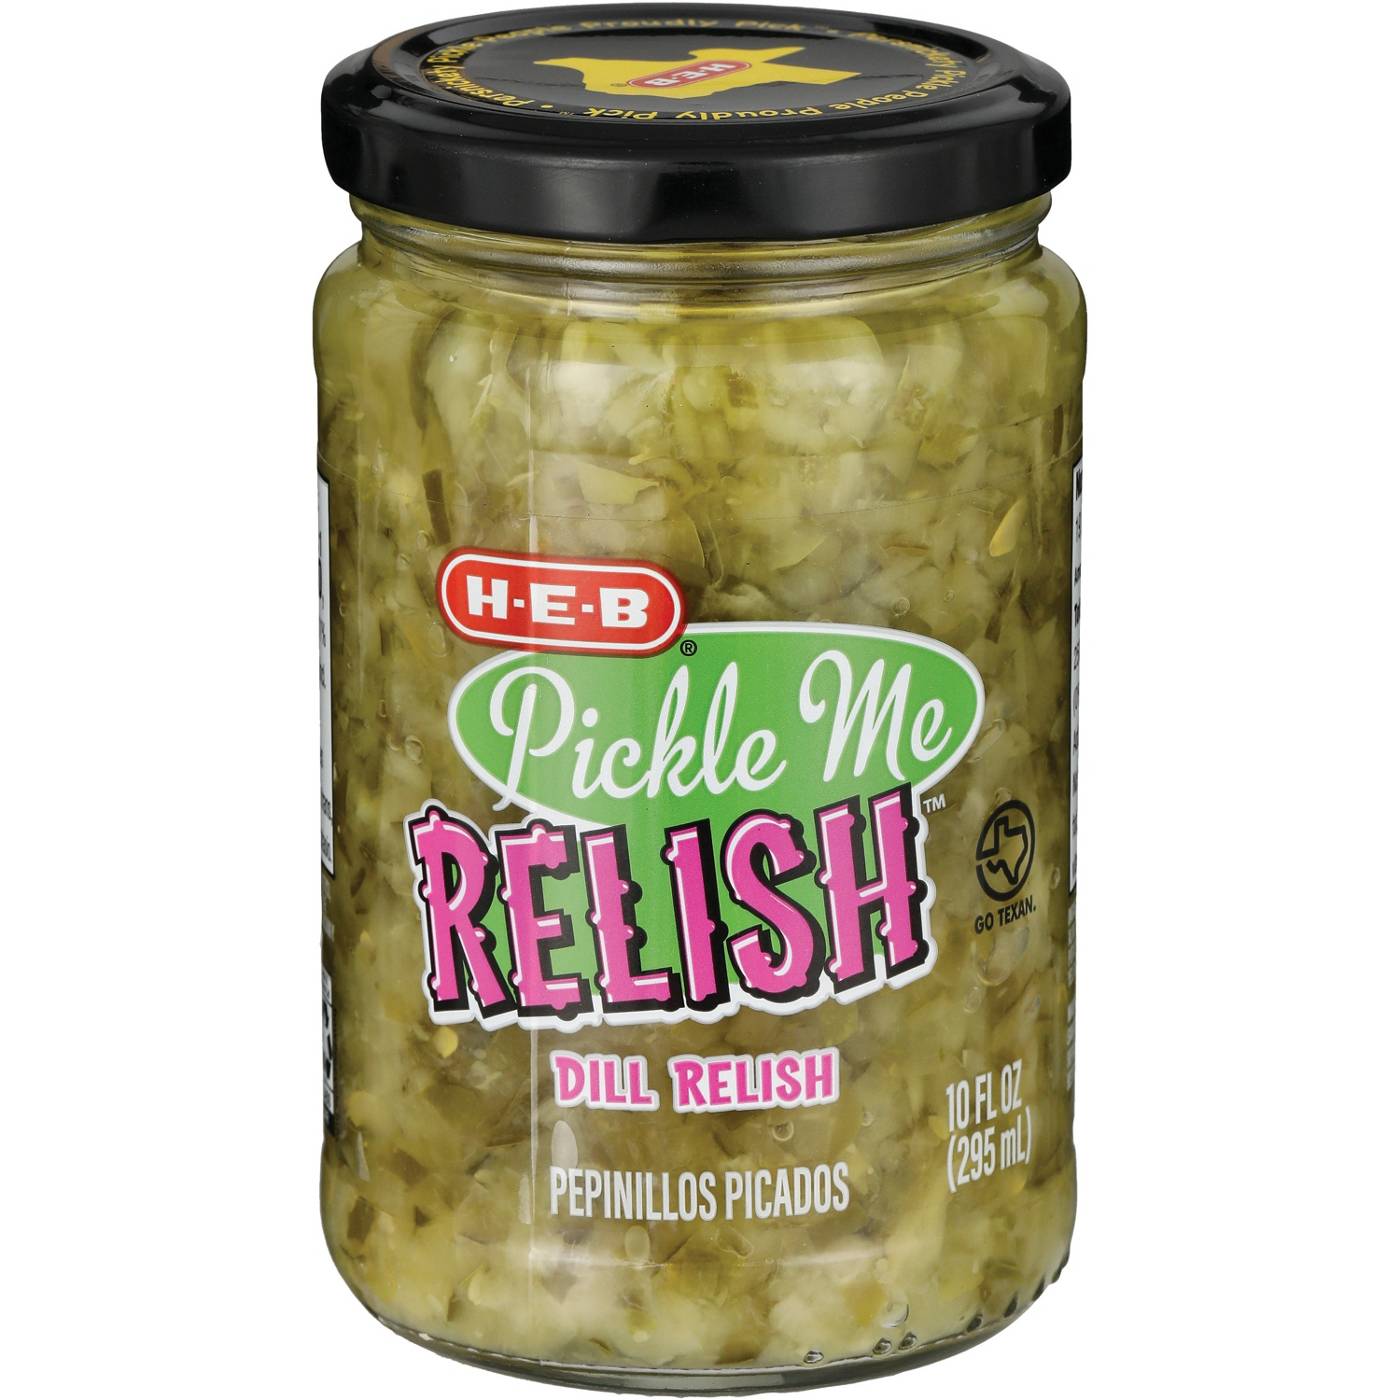 H-E-B Pickle Me Relish Dill Relish; image 2 of 2